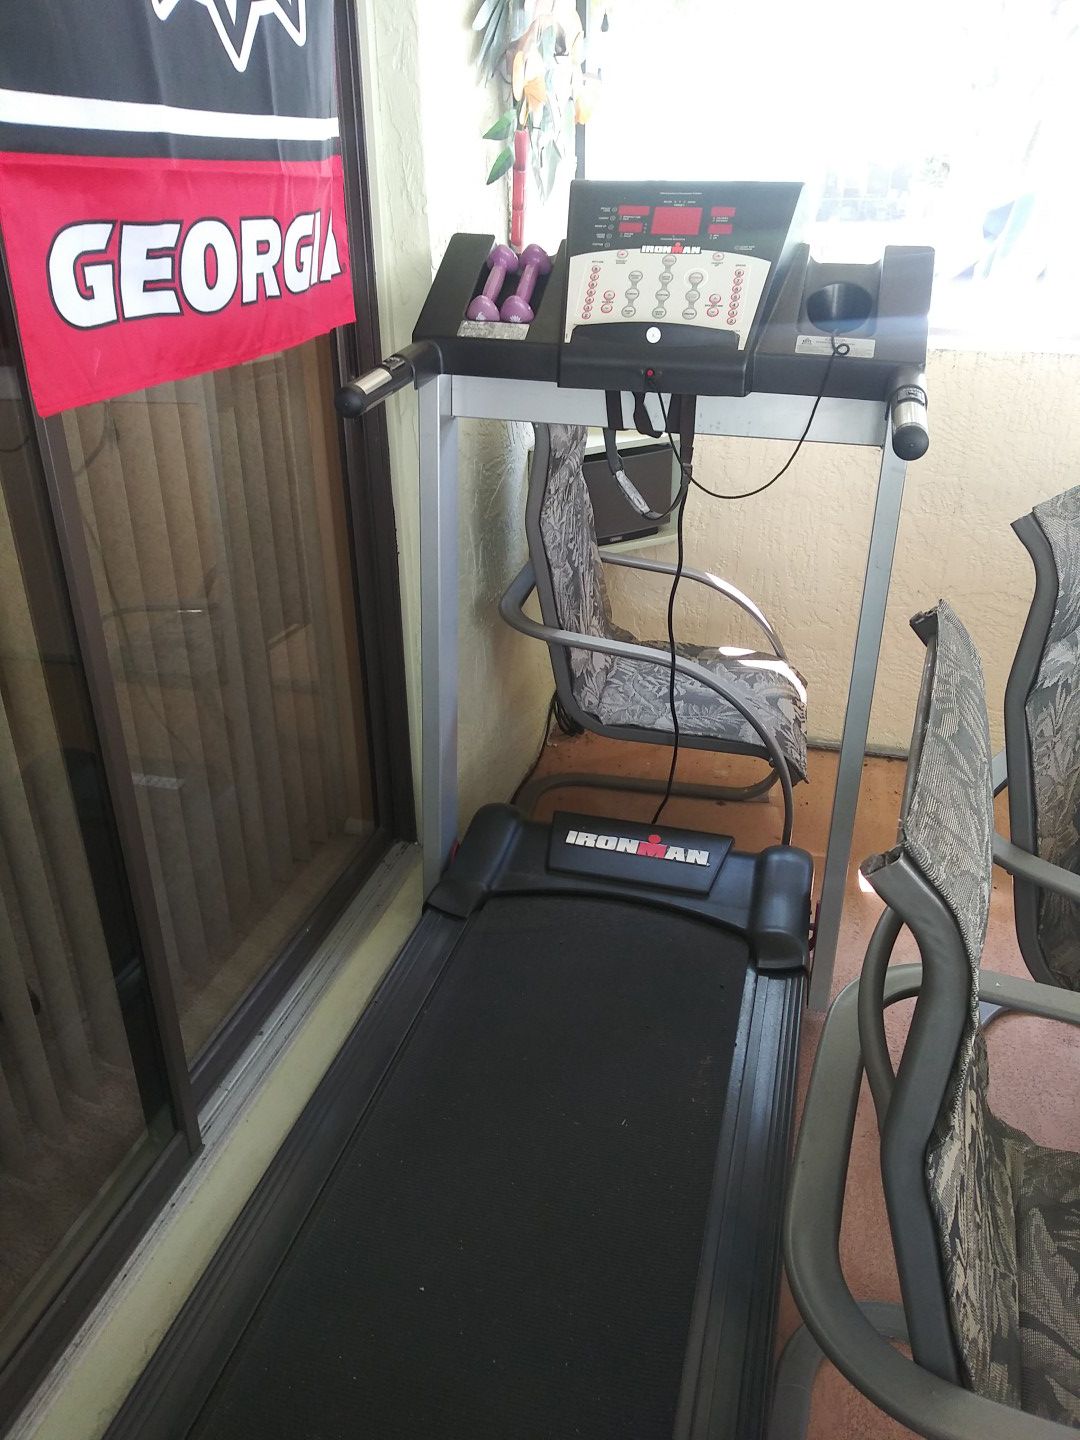 Ironman treadmill